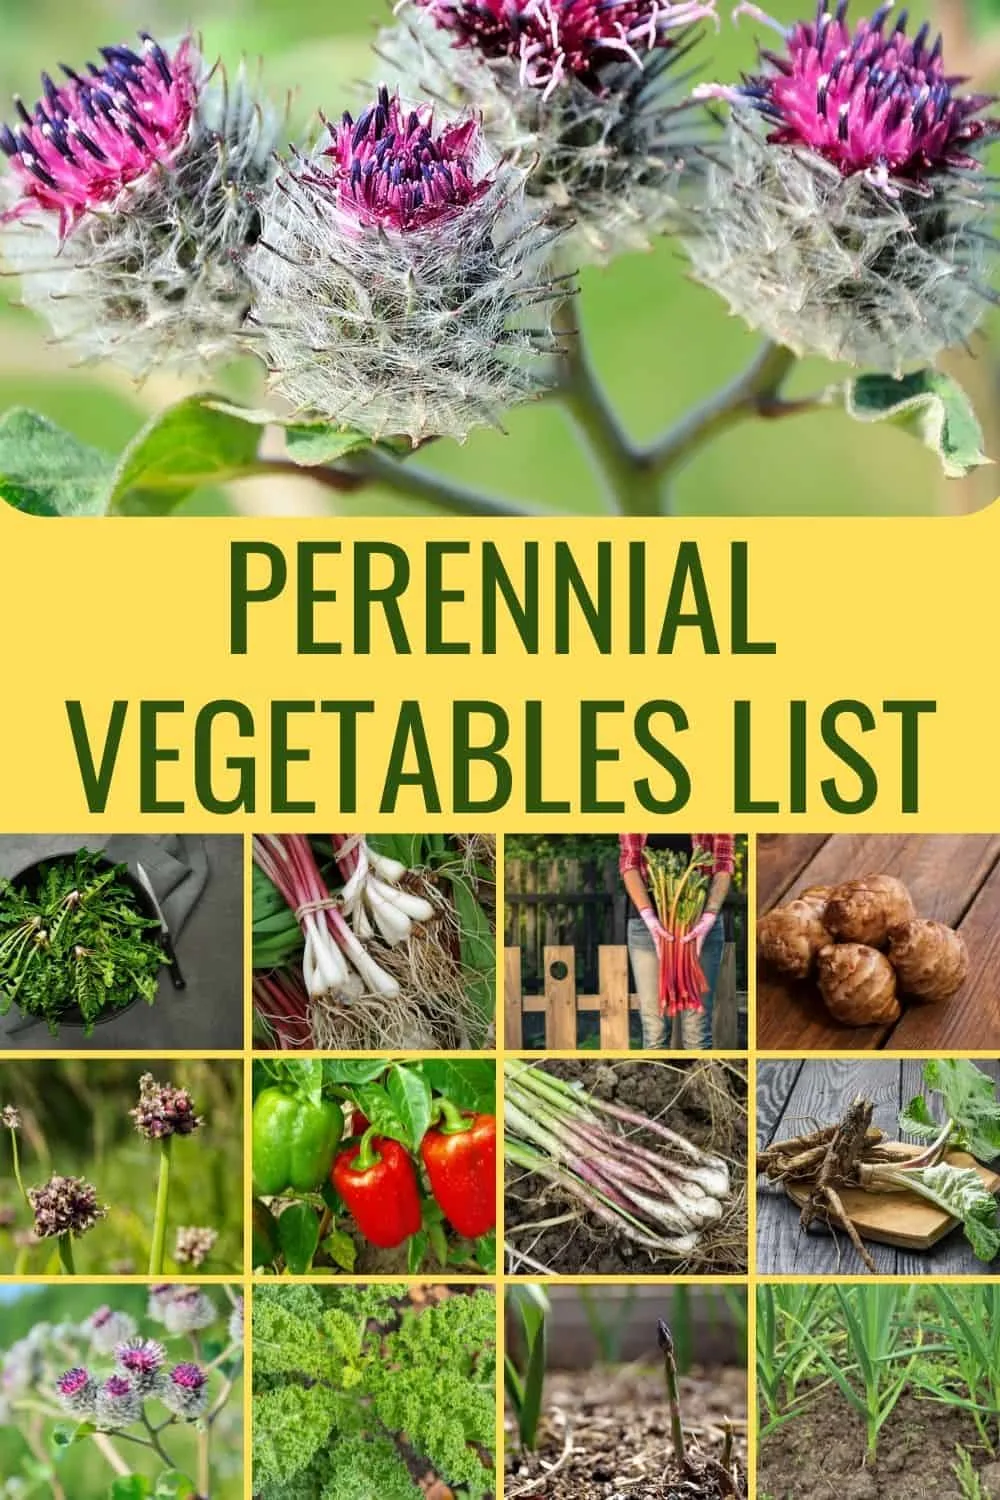 Perennial vegetables list